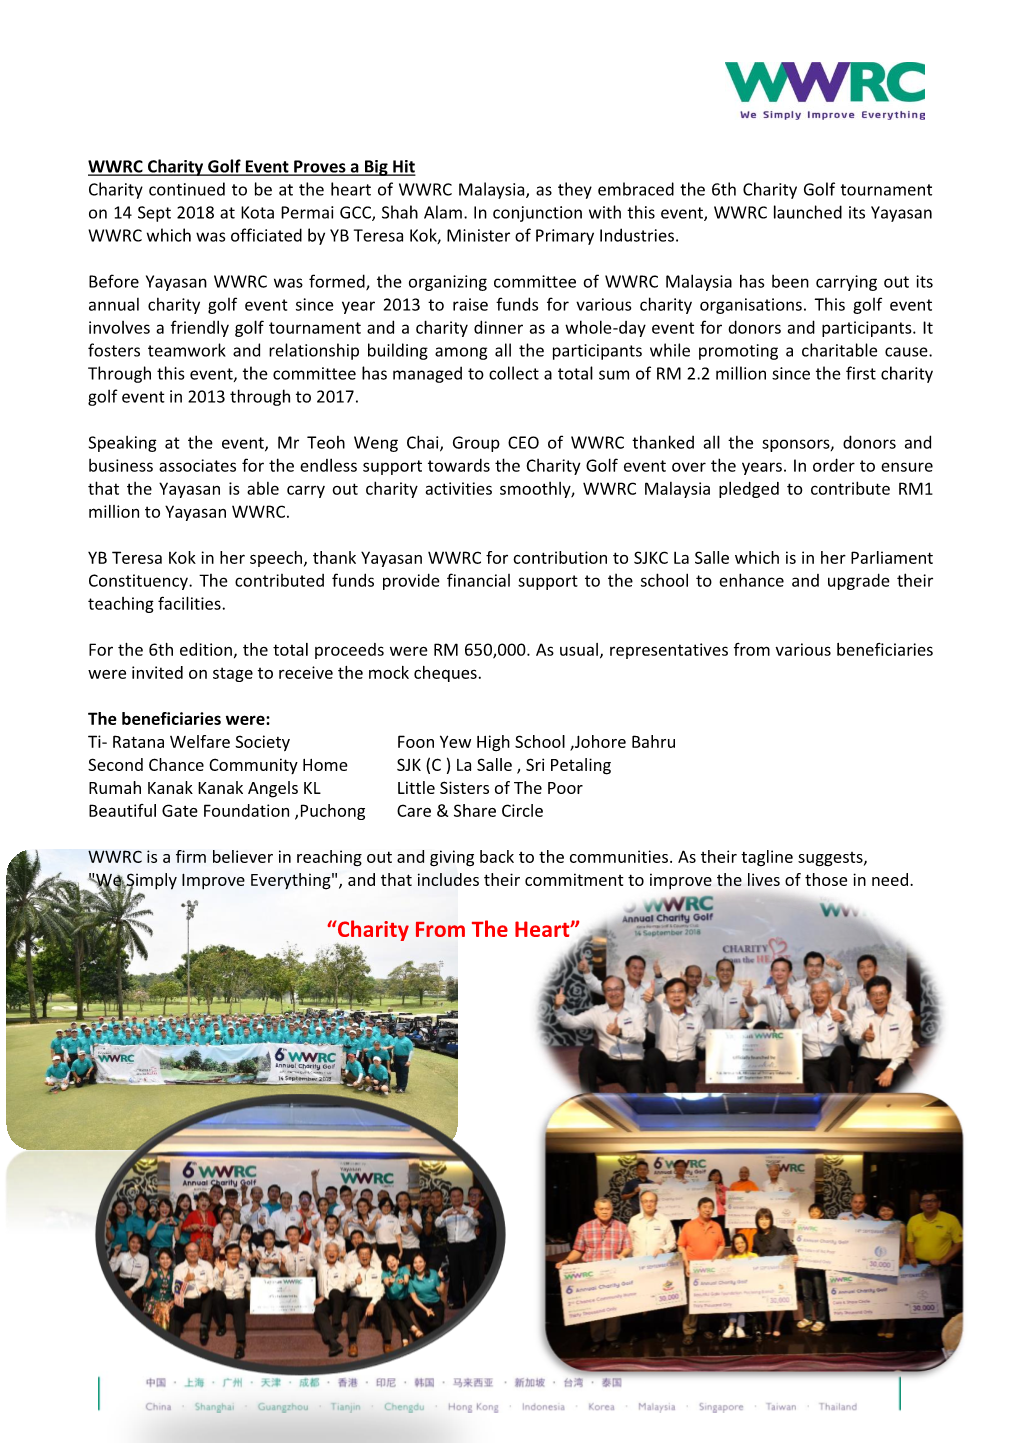 WWRC 2018 Golf Charity